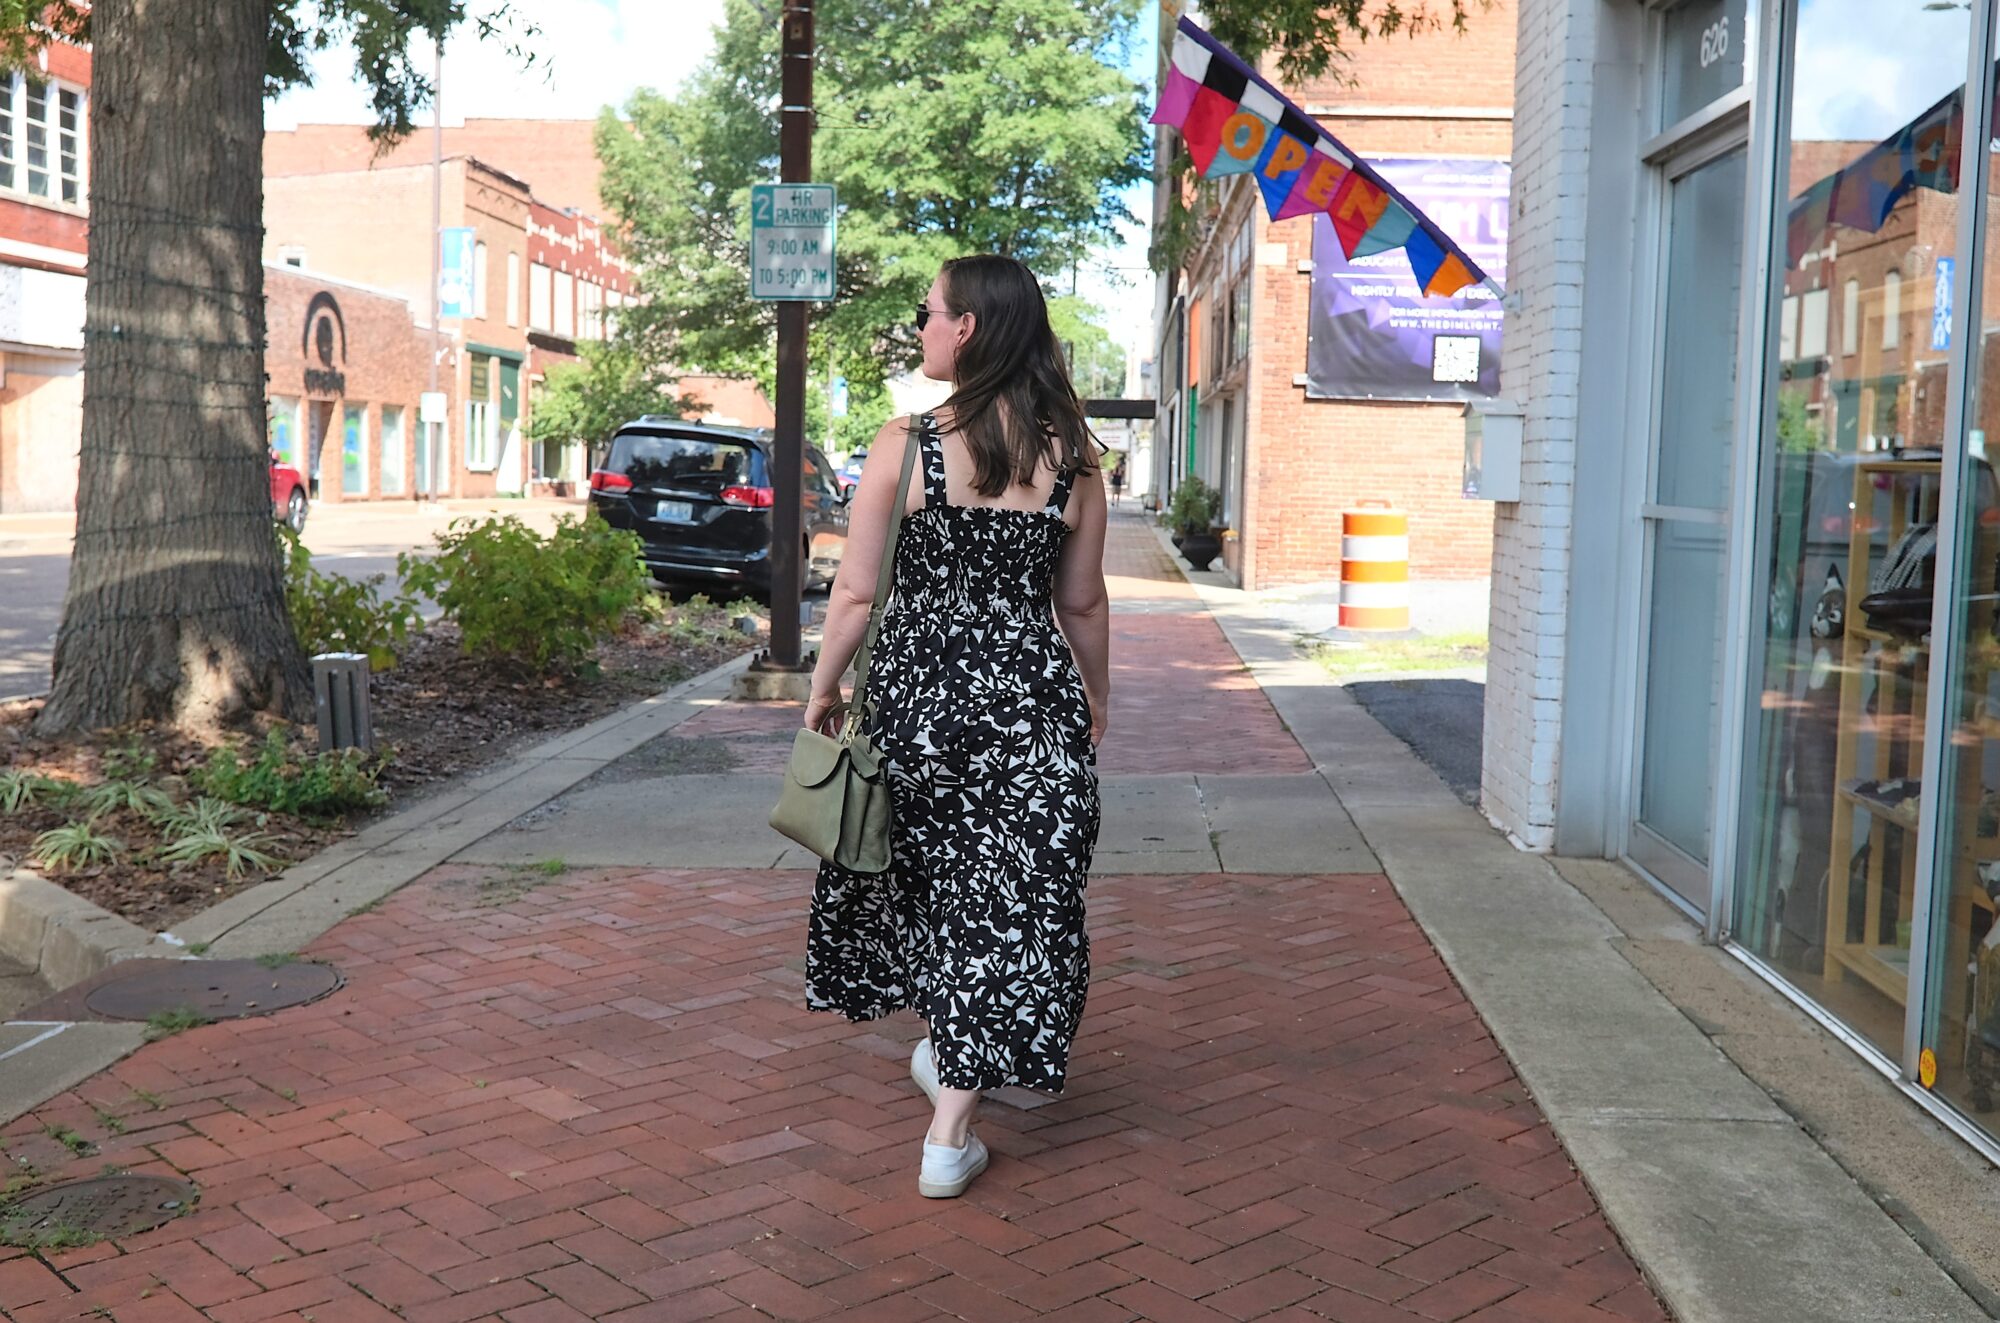 Alyssa walks down a sidewalk in Paducah